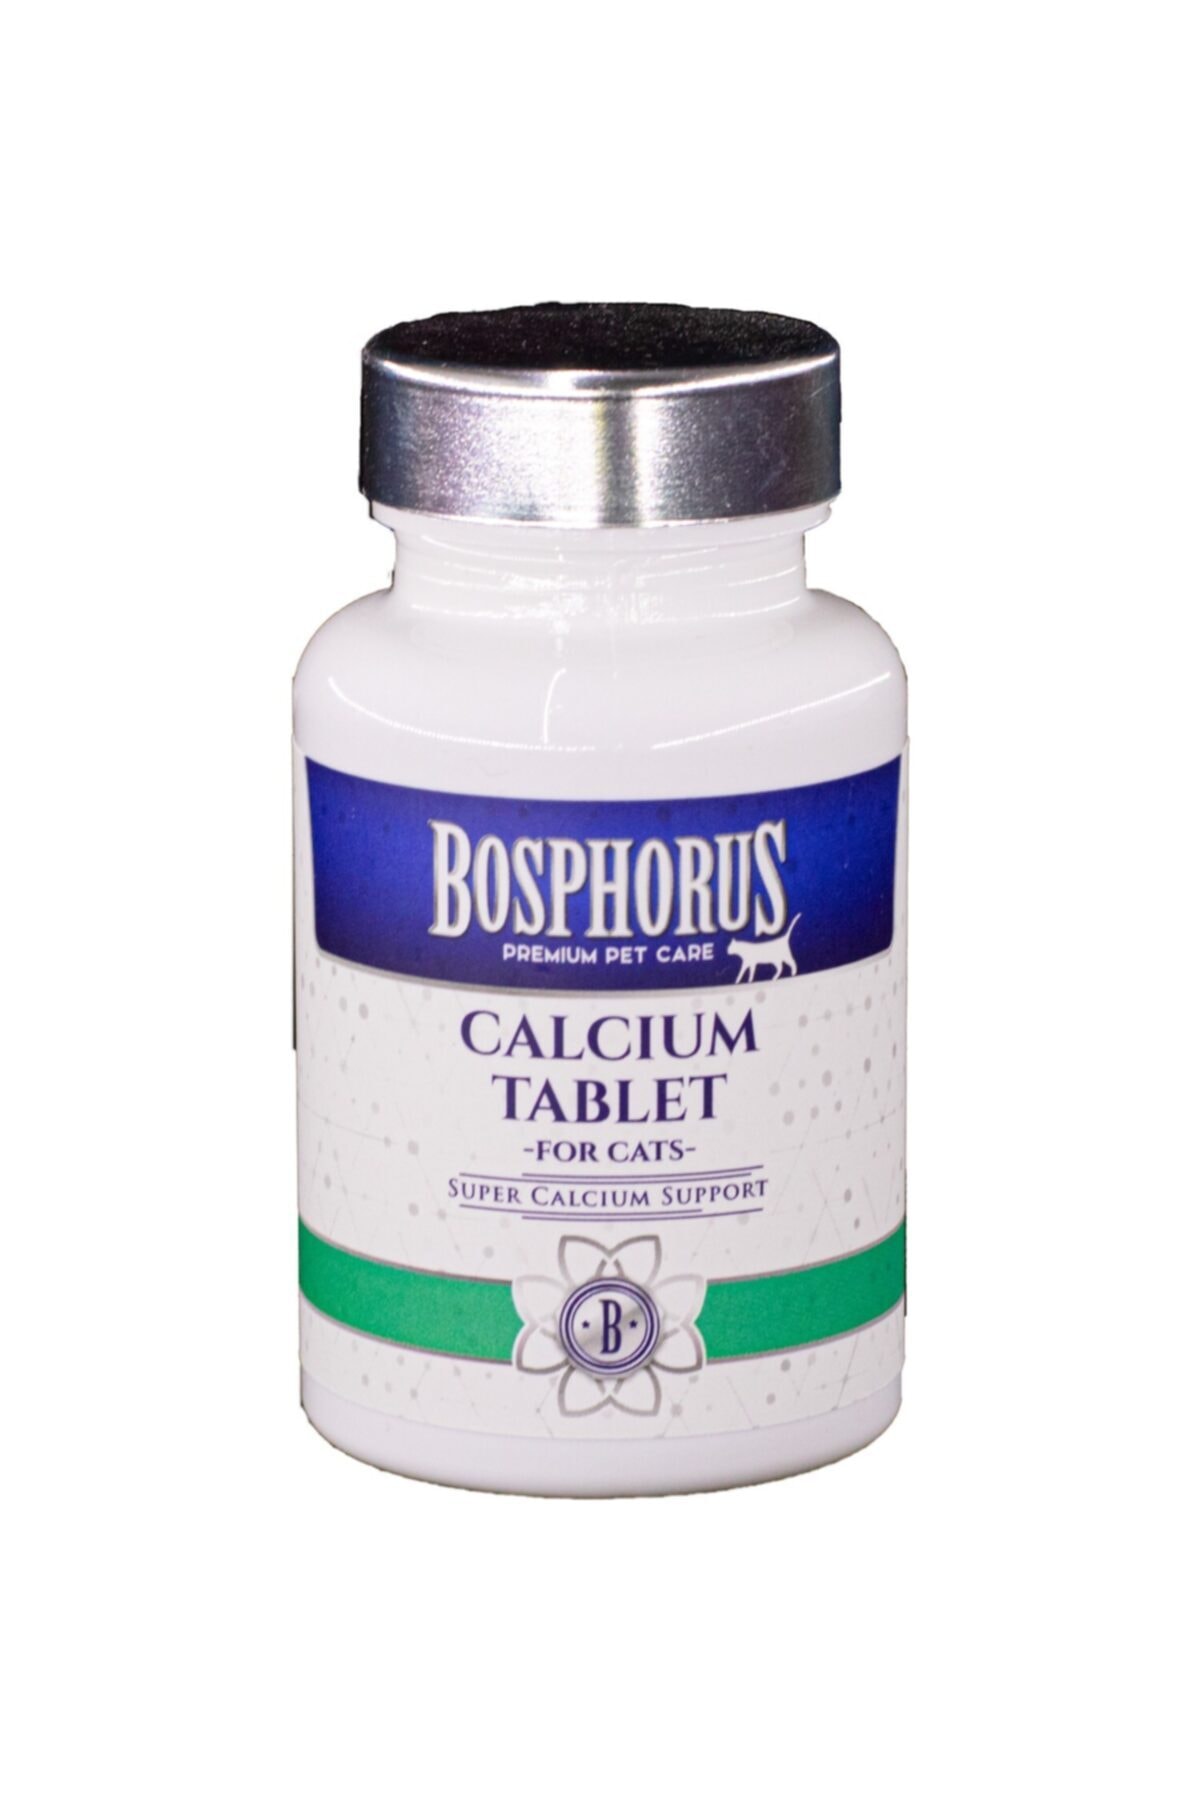 Bosphorus Calcium Tablet For Cats